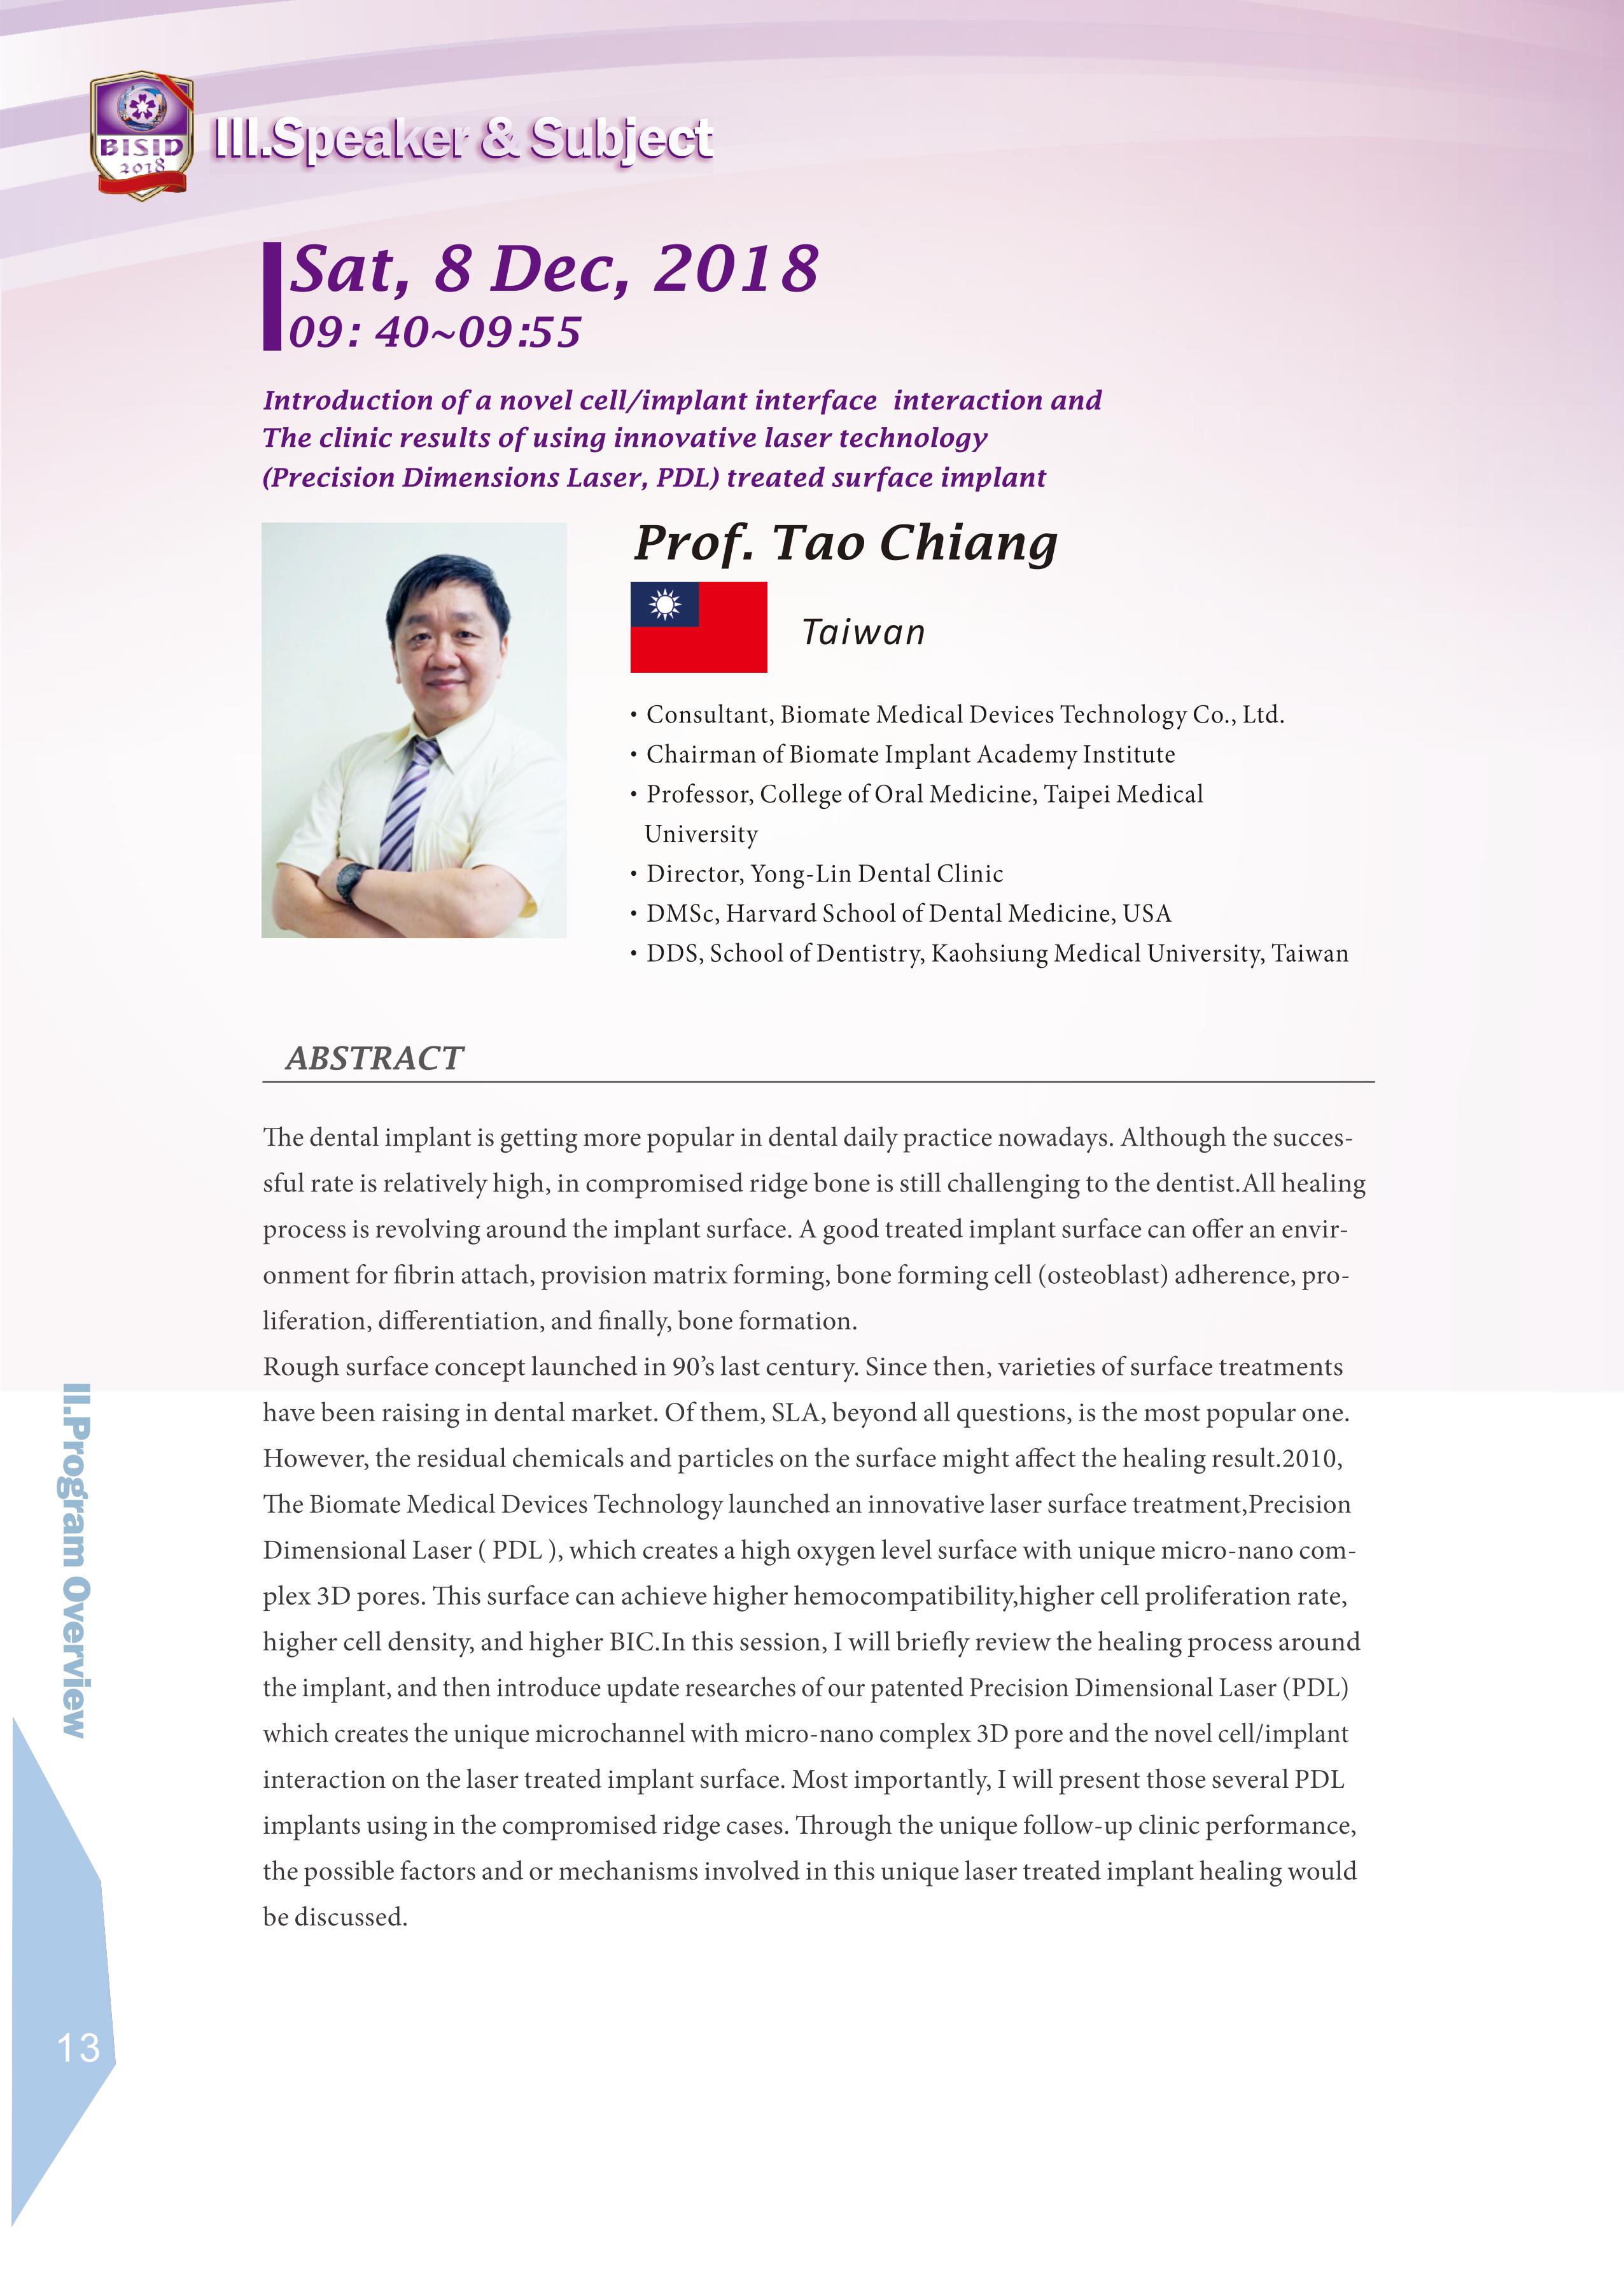 Biomate Internation Symposium of Implant Dentistry-Prof.Tao Chiang